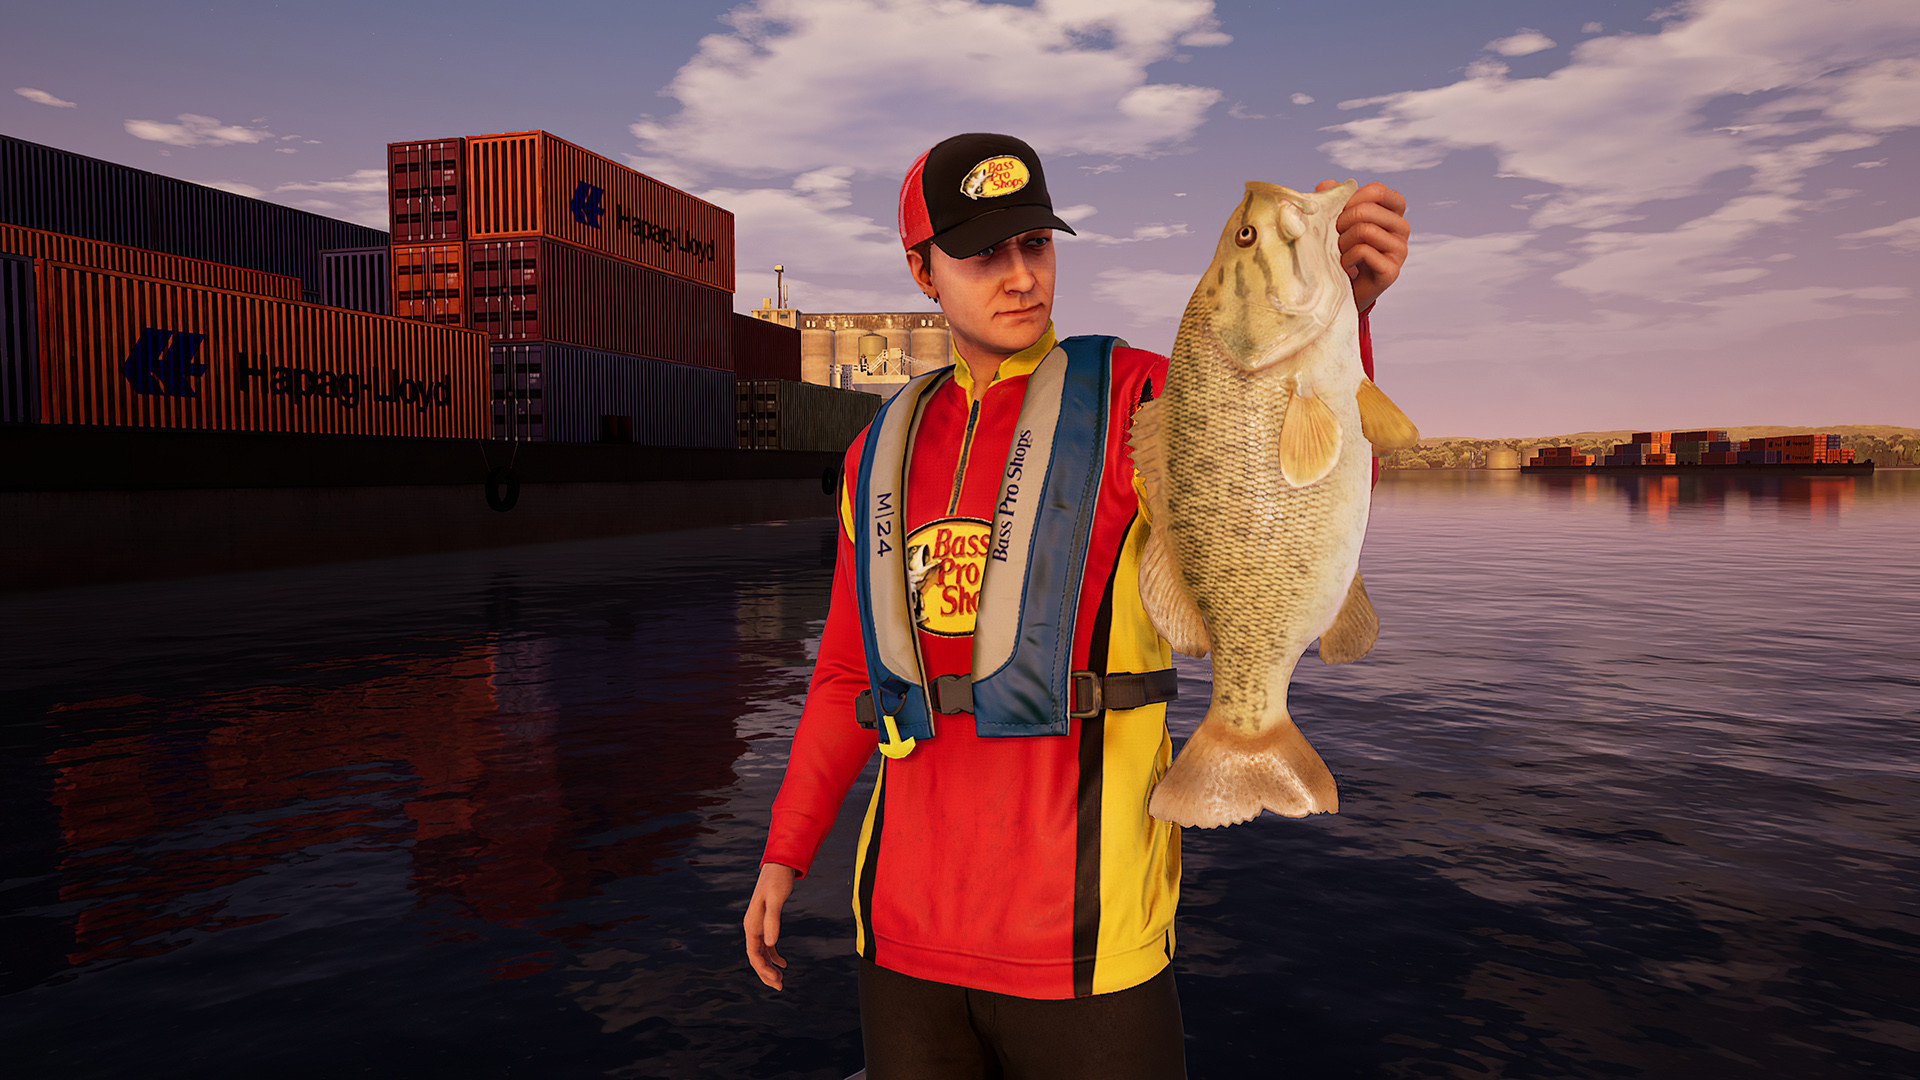 Fishing Sim World: Bass Pro Shops Edition, 46% OFF